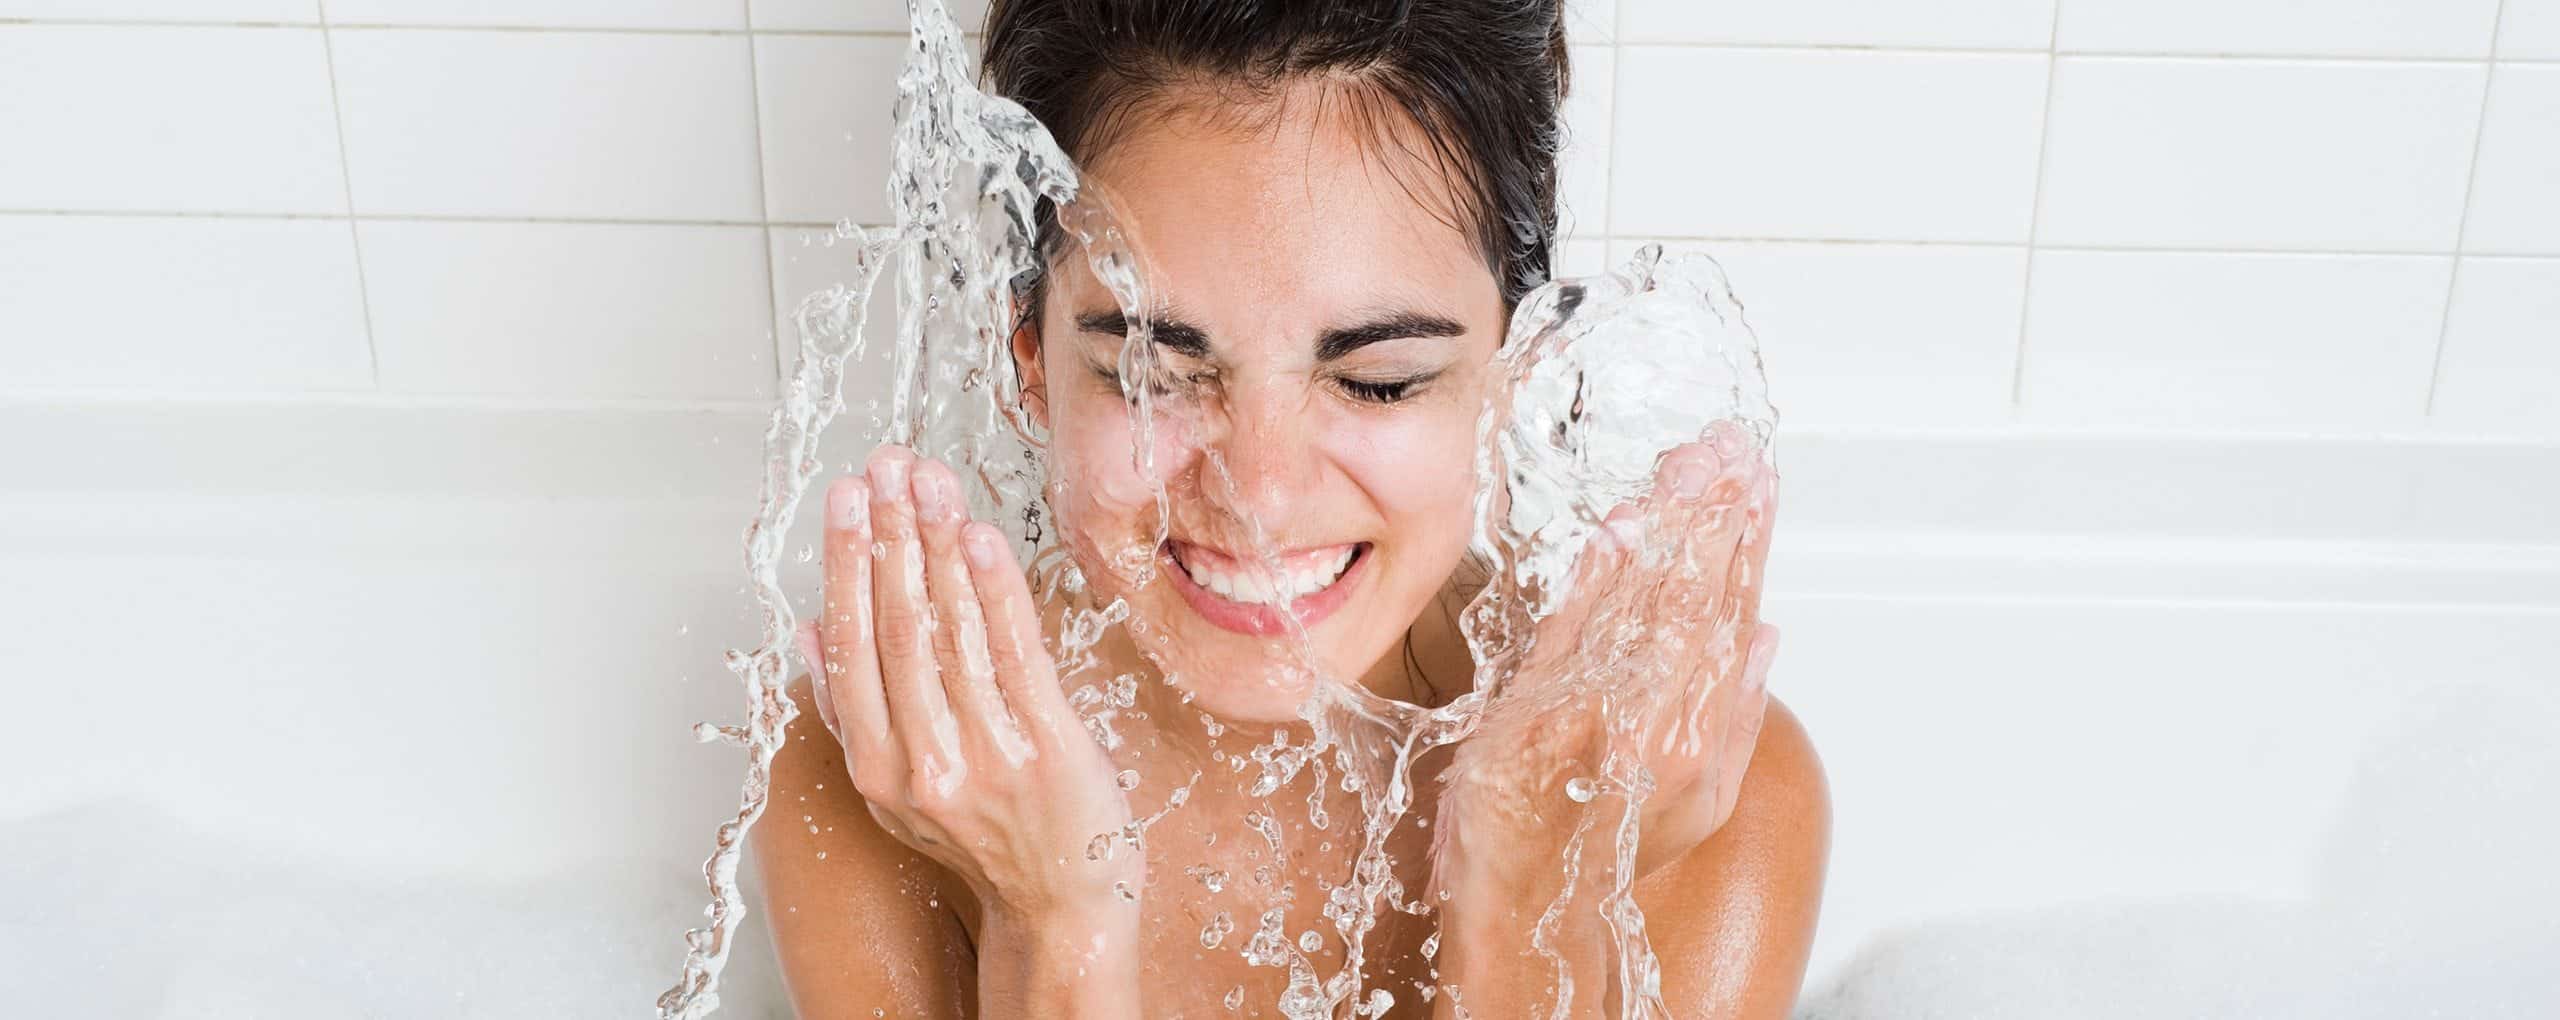 Woman in washroom Splashing water on face. Water Heater